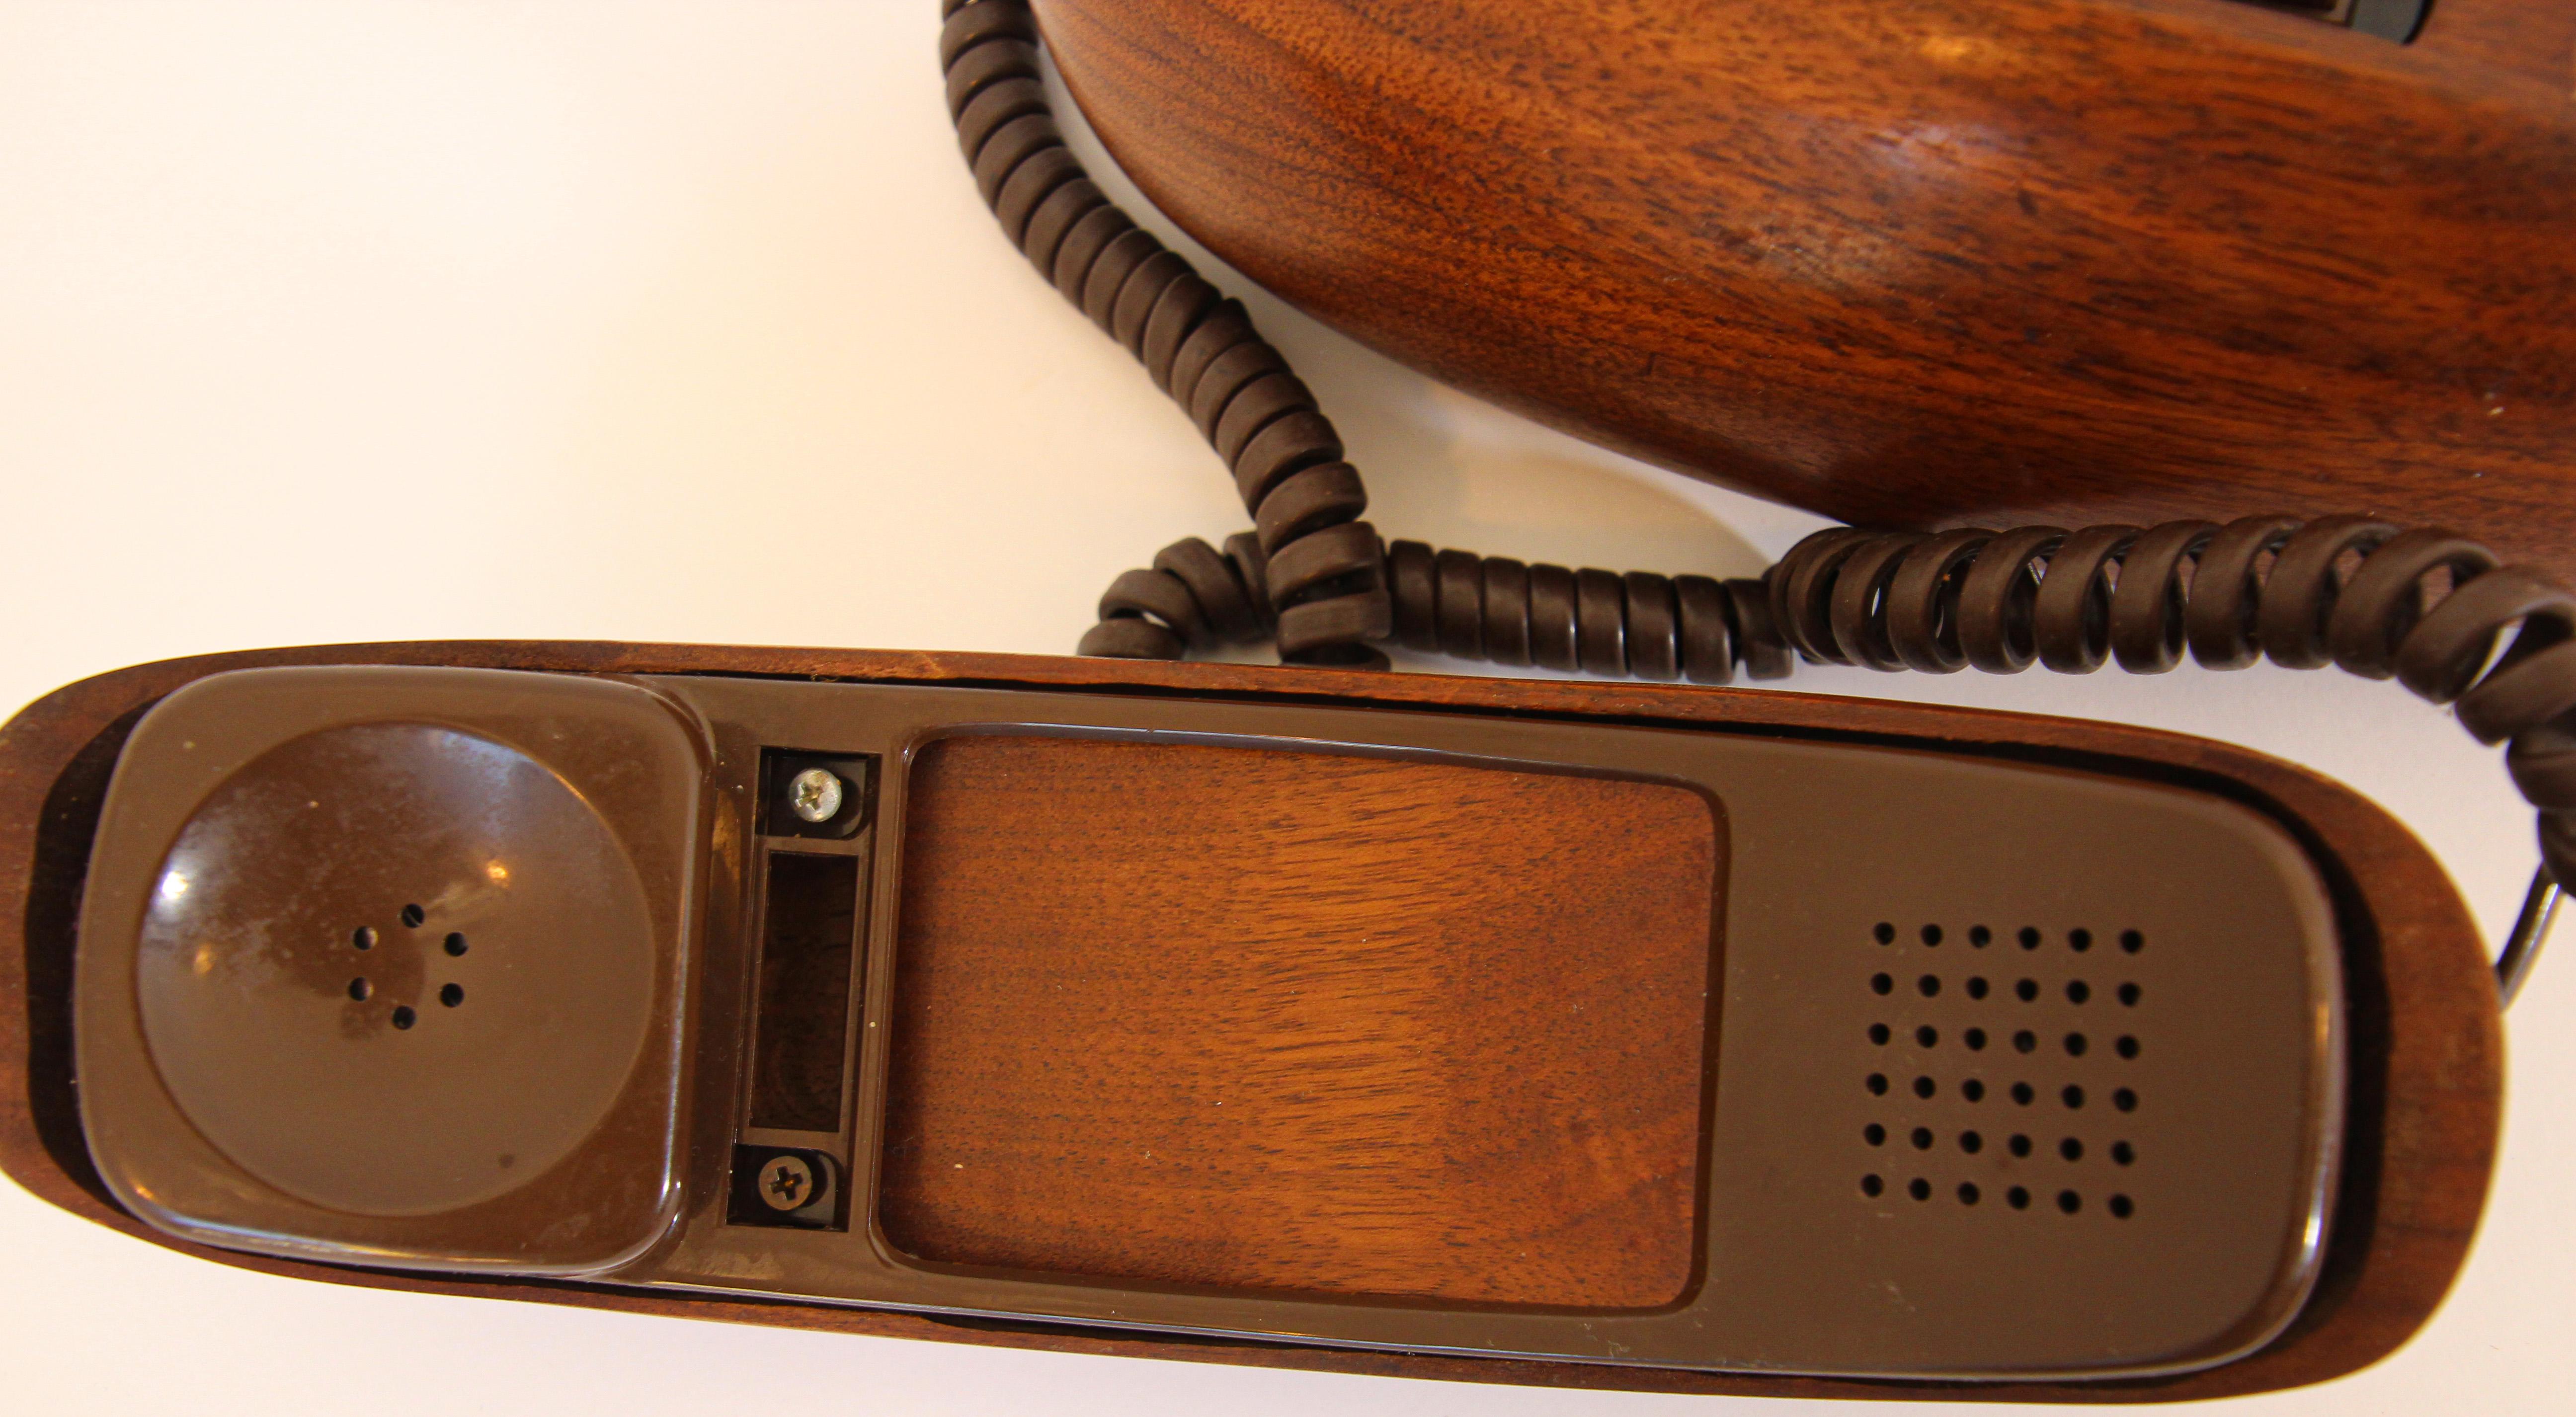 Bakelite Vintage Telephone Covered in Wood, Organic Modern Style Retro Phone